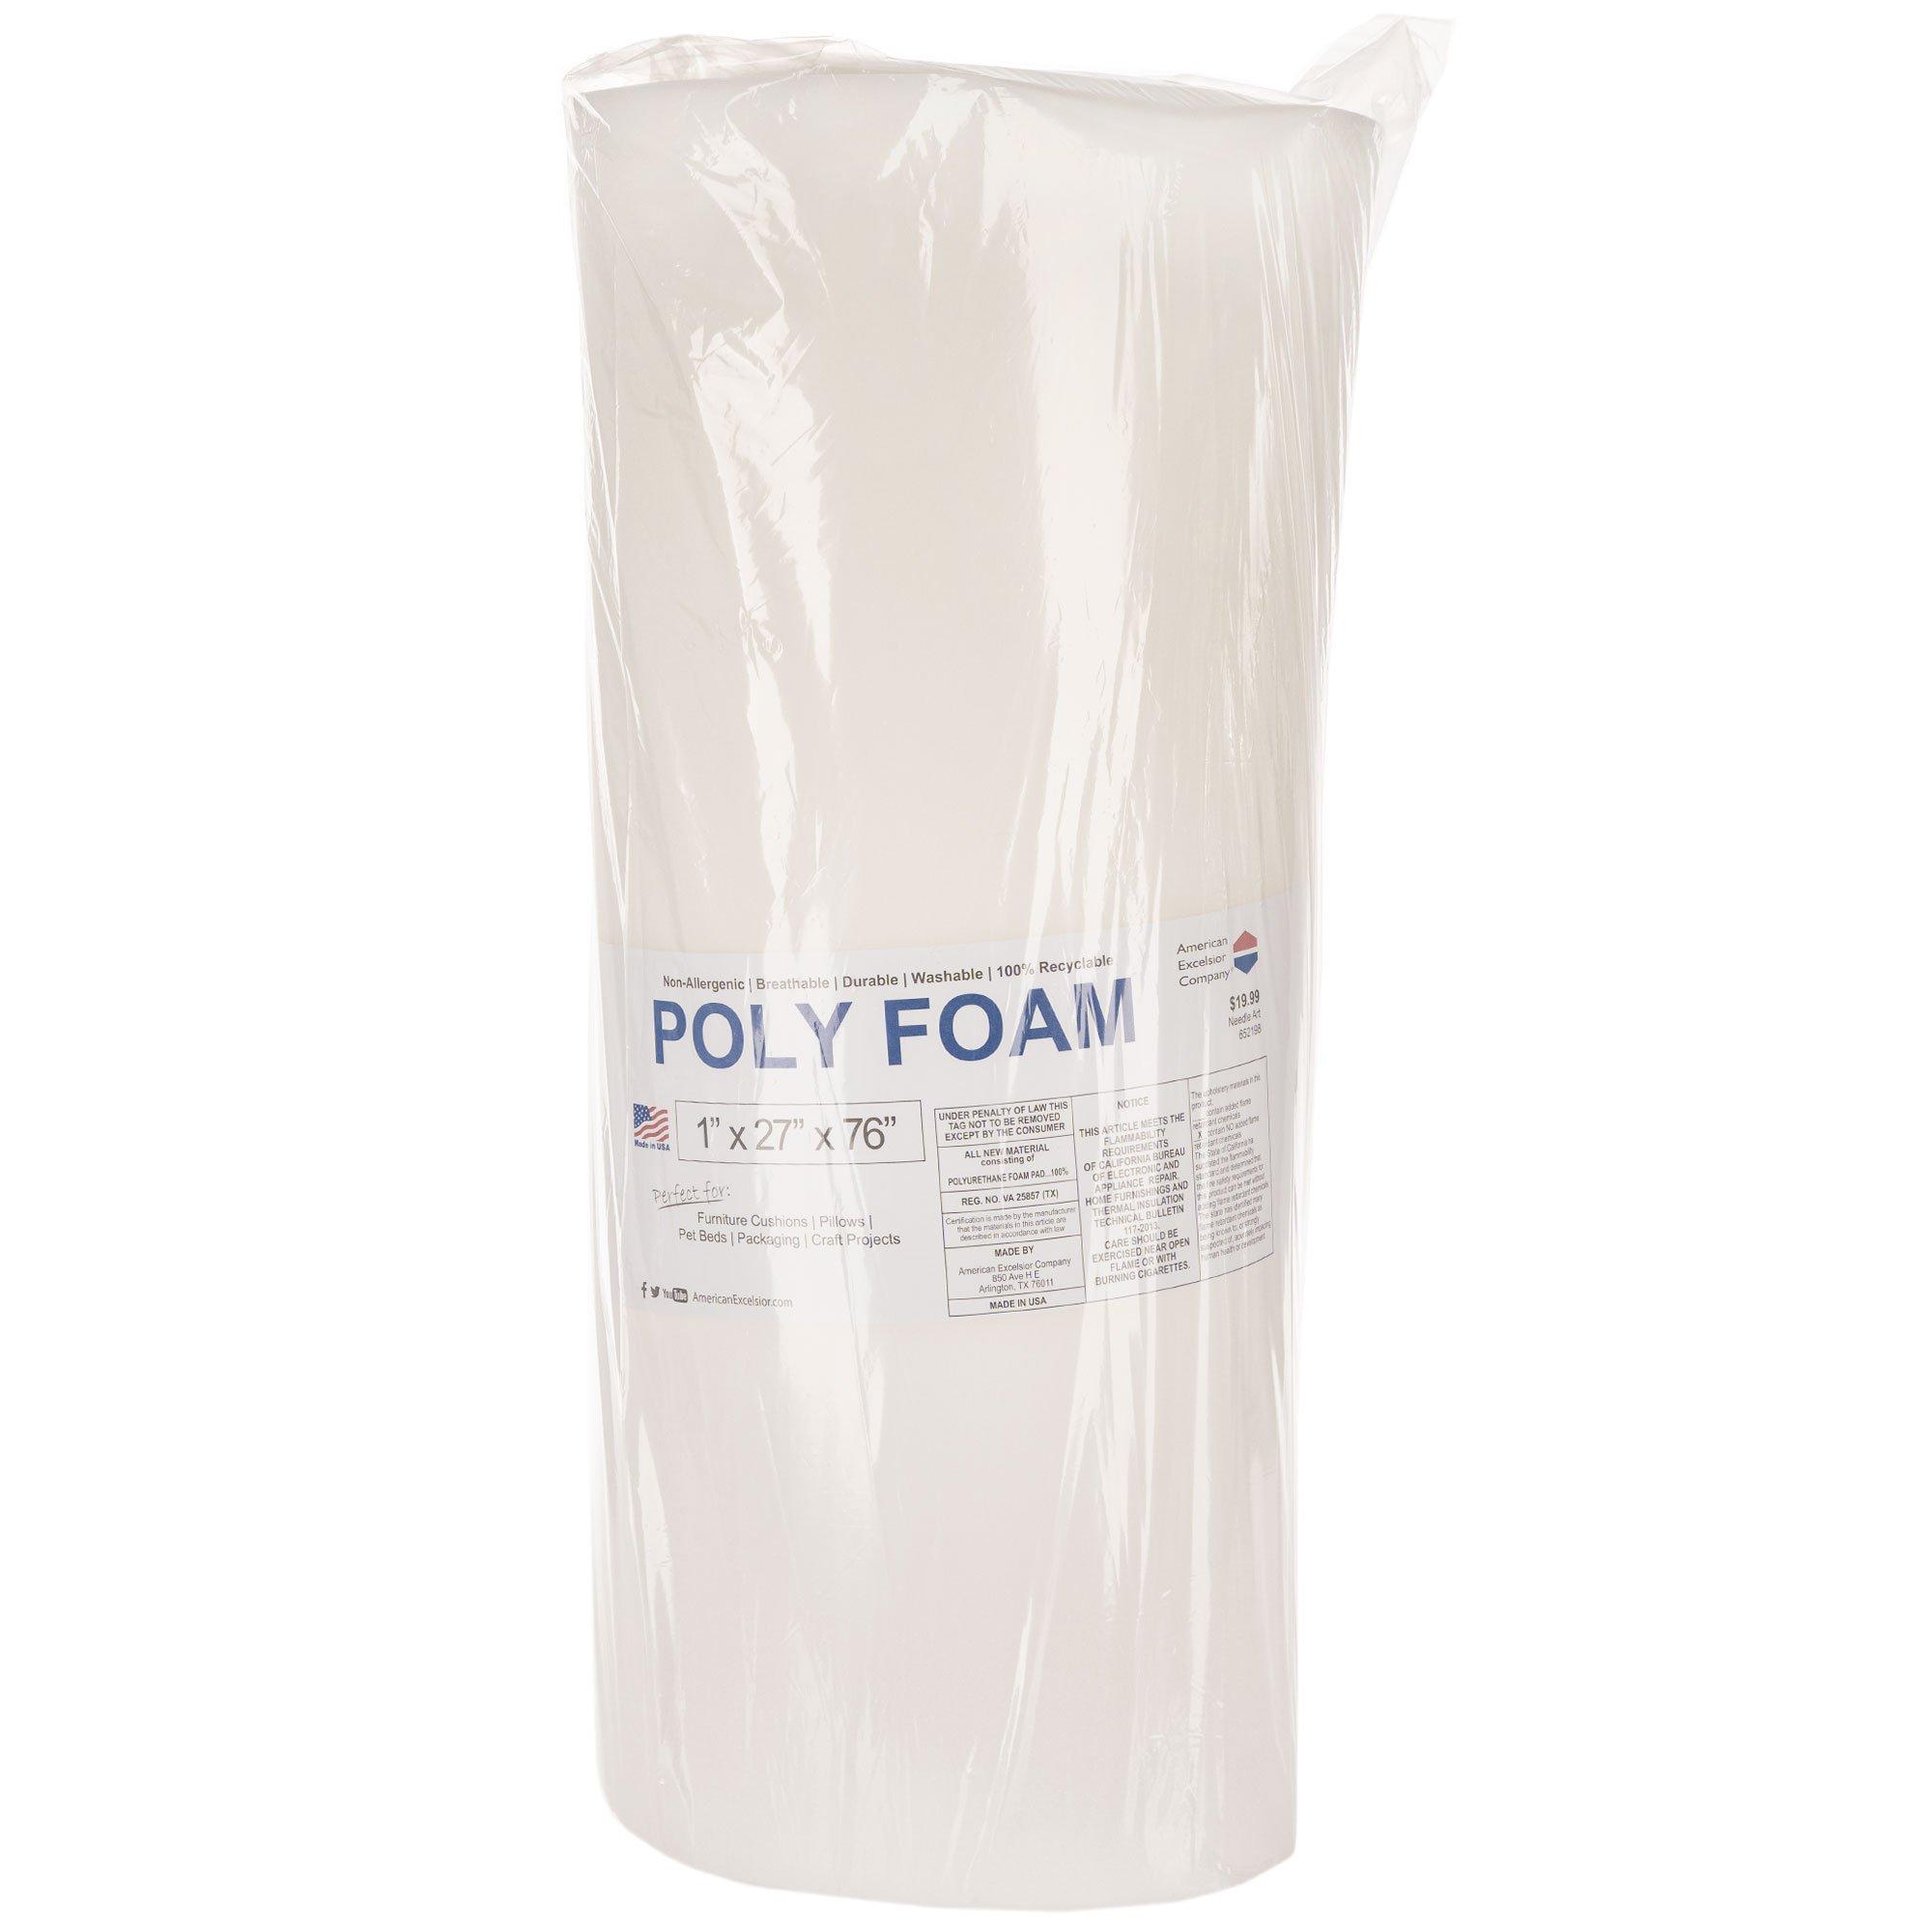 Premium Poly Foam Cot Pad, Hobby Lobby